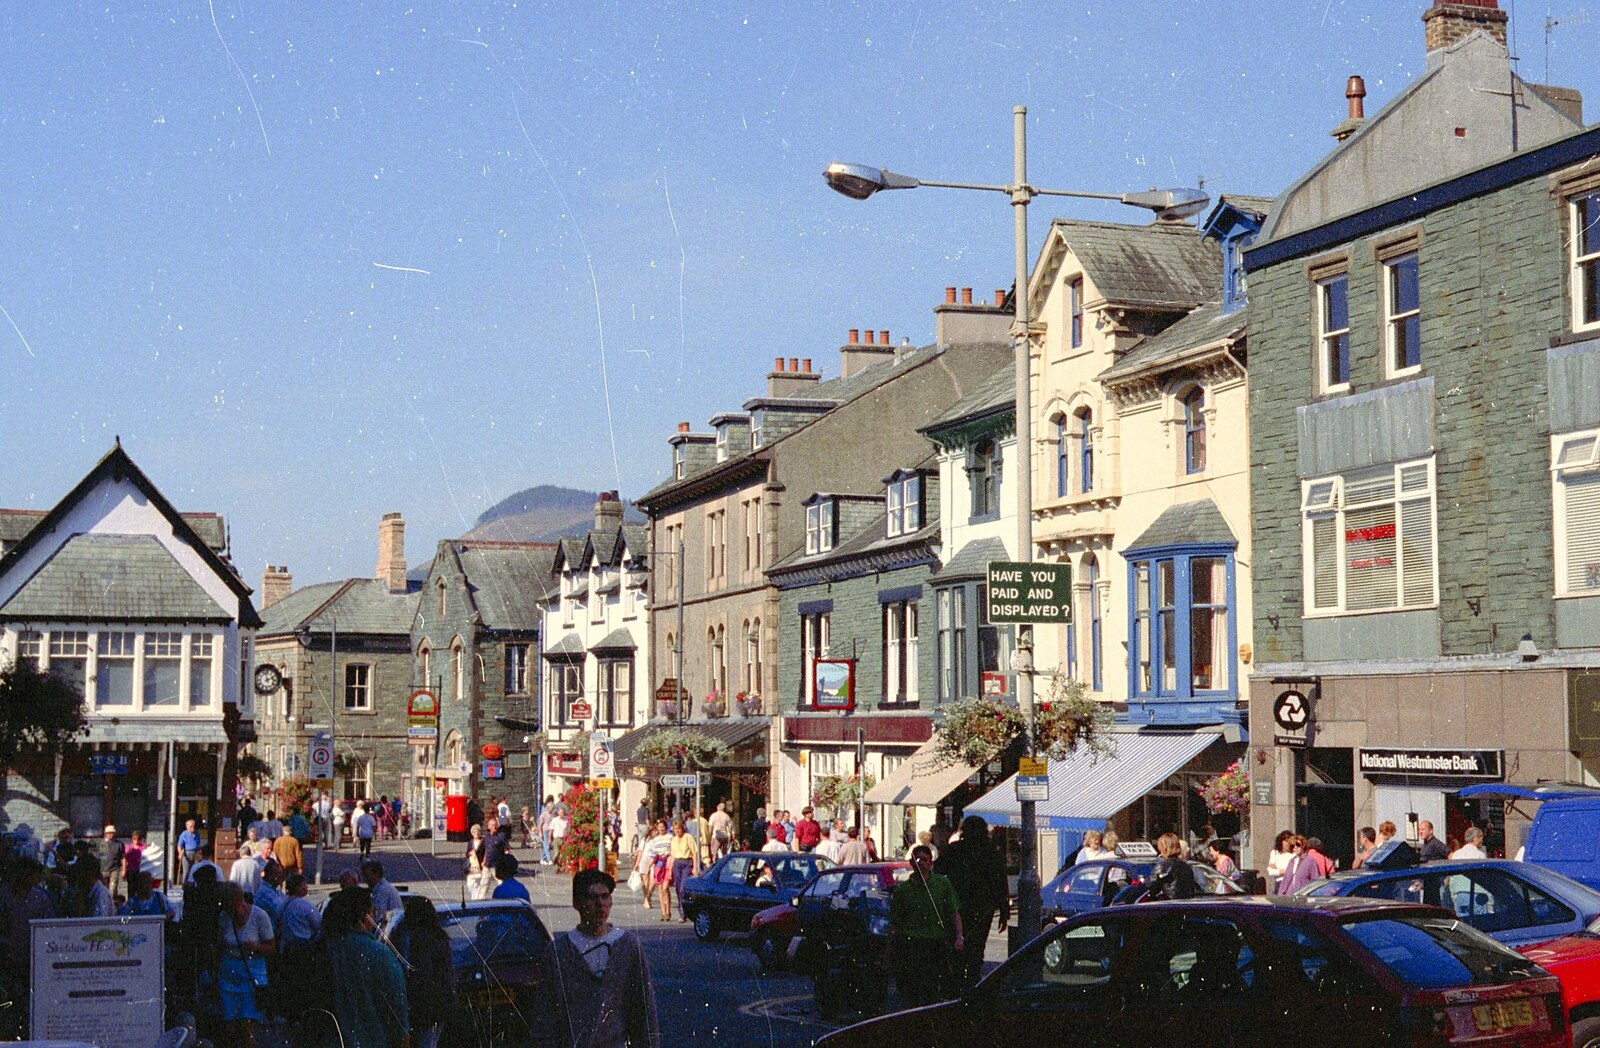 CISU Hang Around Keswick and The Briars, Cumbria - 16th September 1996: The centre of Keswick